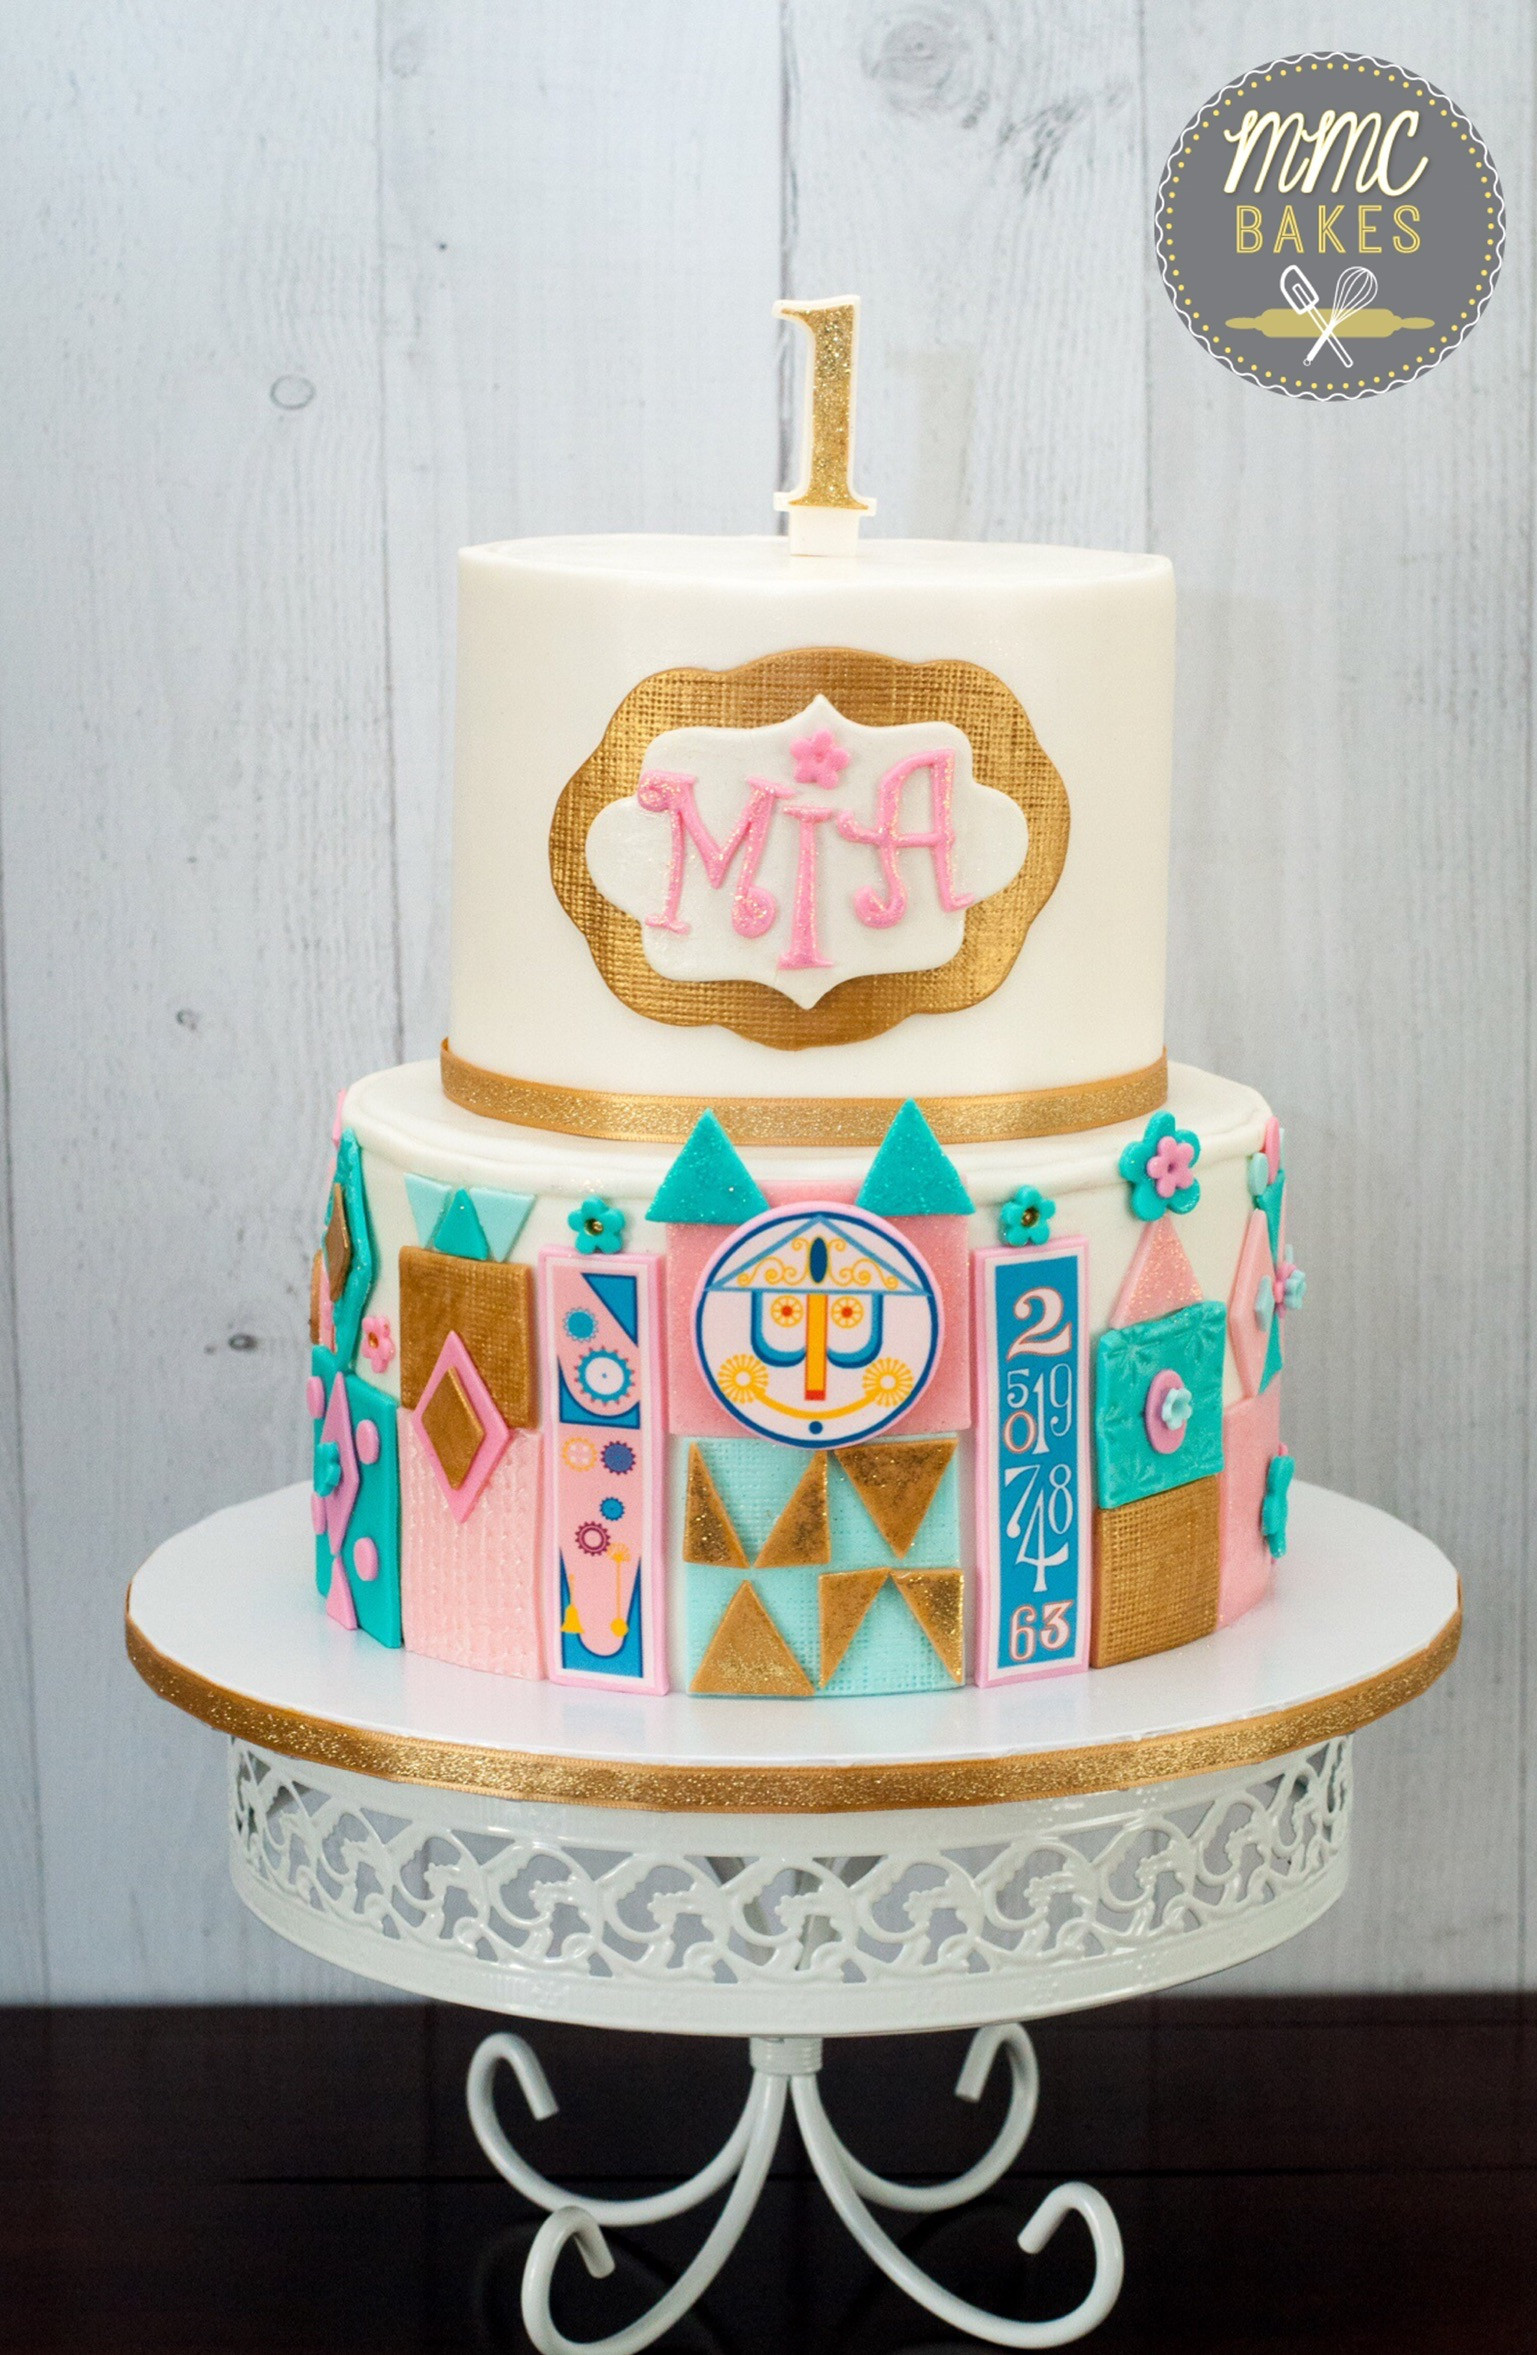 Small Birthday Cakes
 “It’s a Small World” Birthday Cake – MMC Bakes